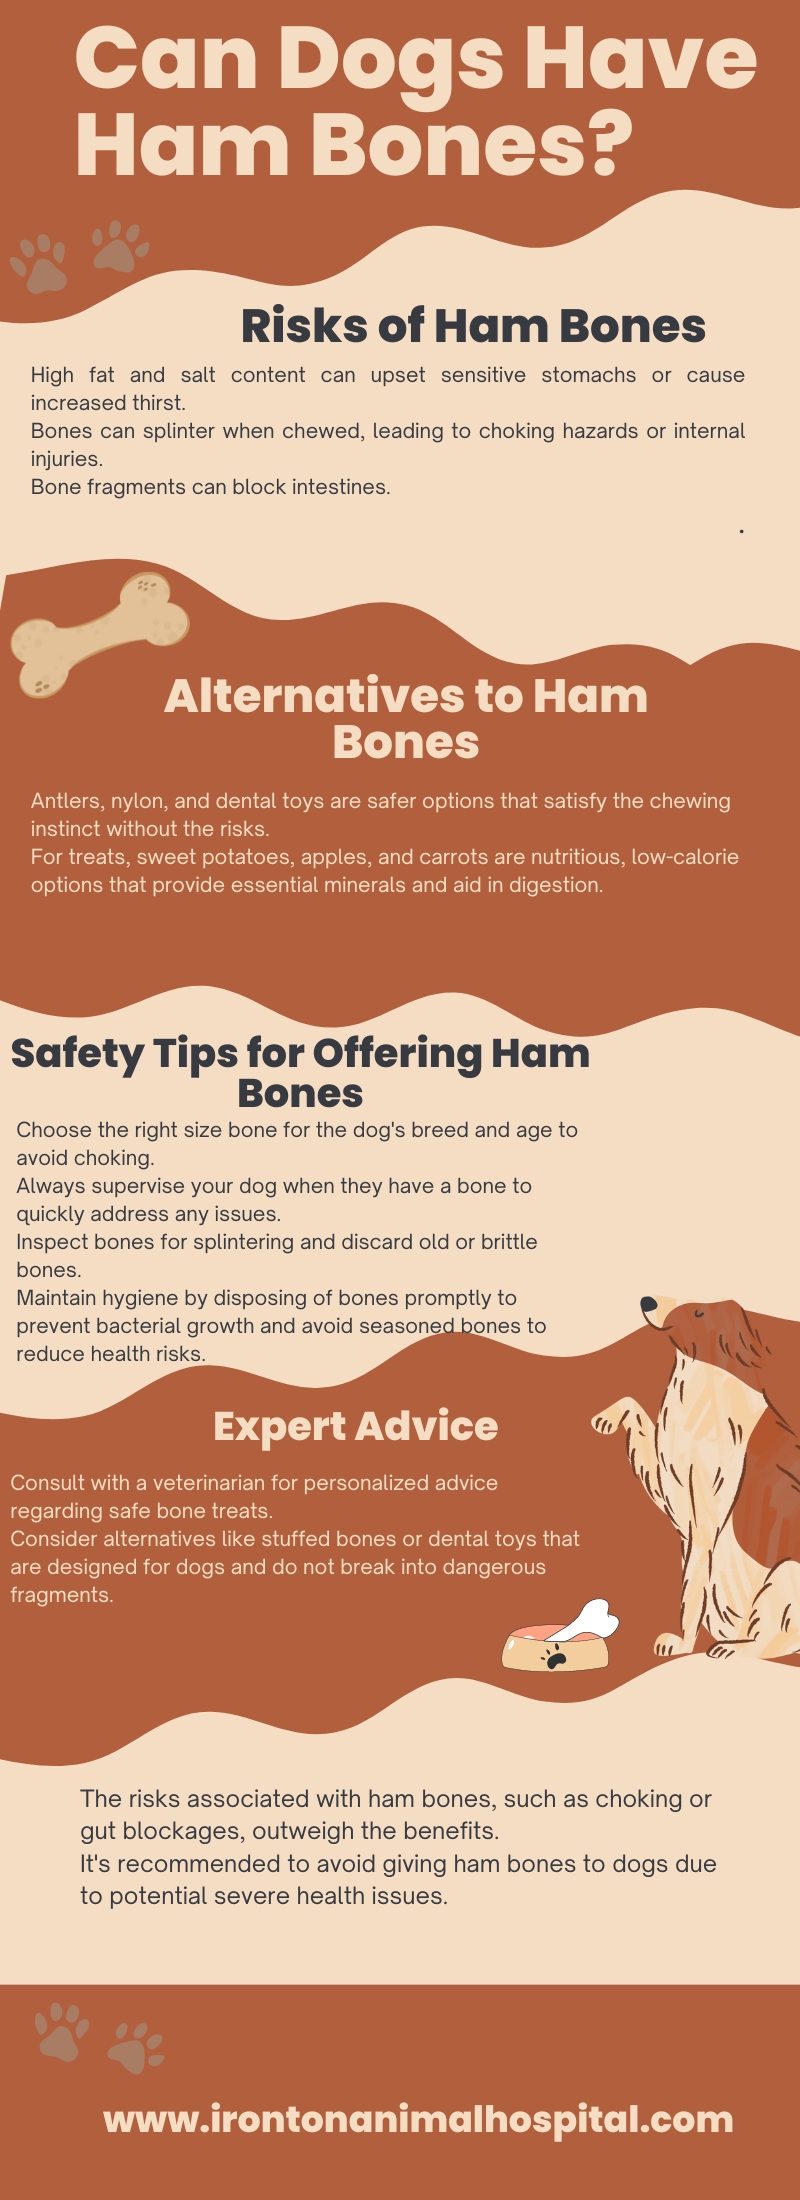 Can Dogs Have Ham Bones ingographic infographic